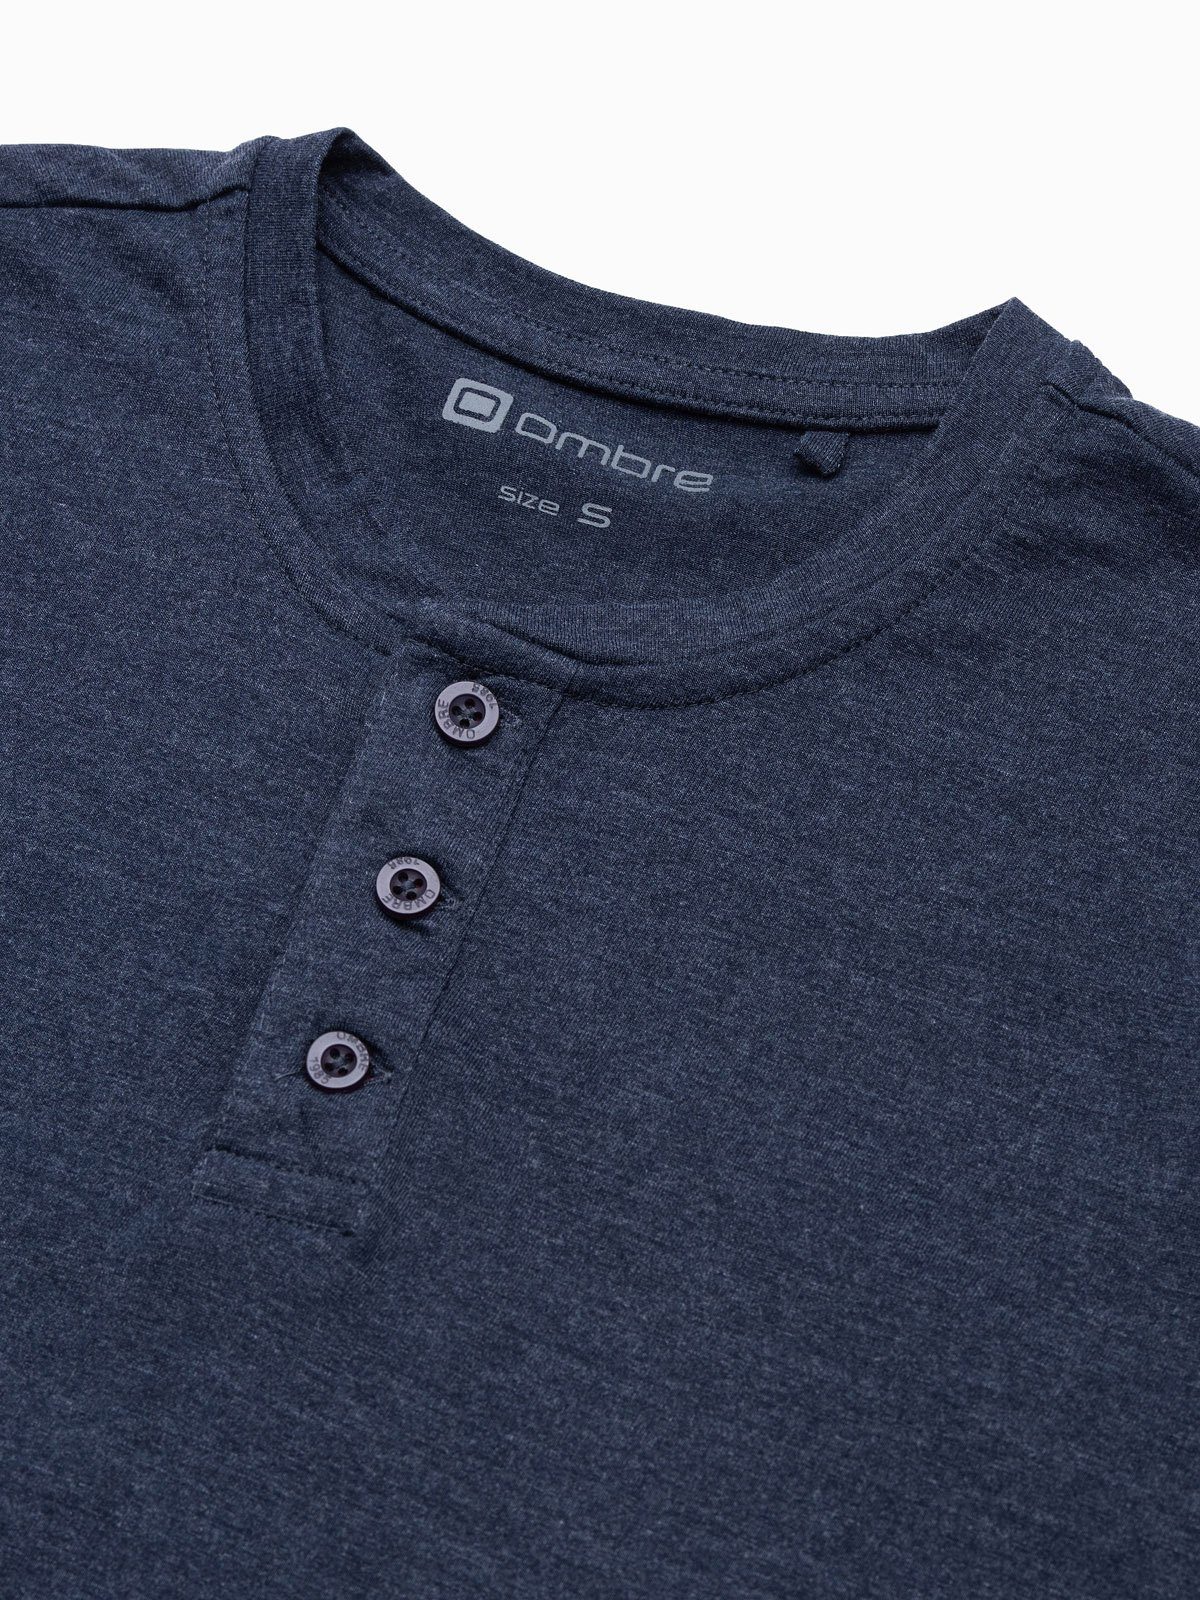 S1390 OMBRE T-Shirt Unifarbenes Herren-T-Shirt marineblau - L